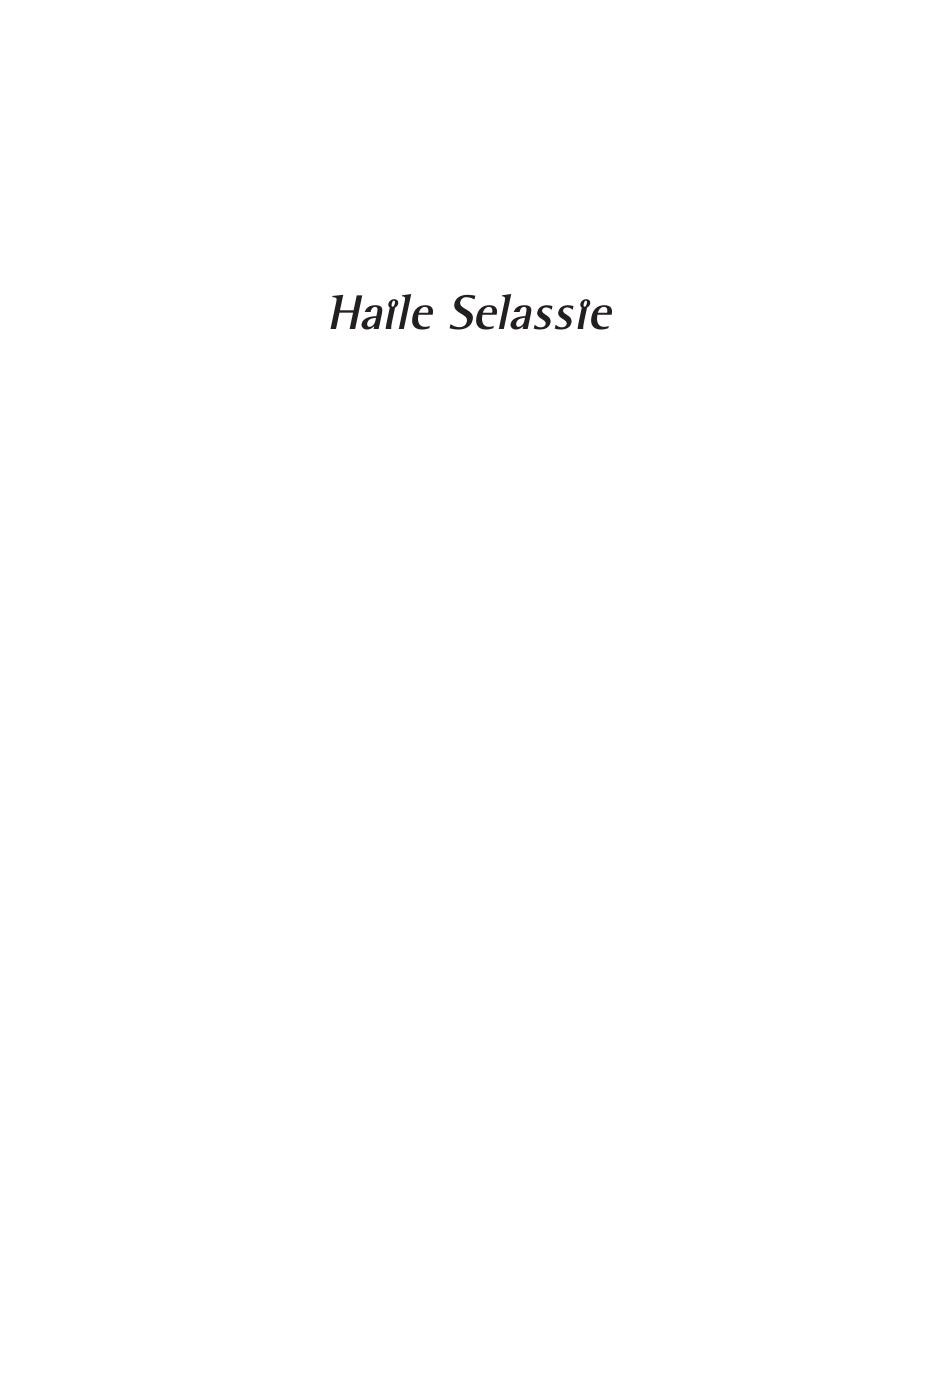 Haile Selassie: His Rise, His Fall by Haggai Erlich